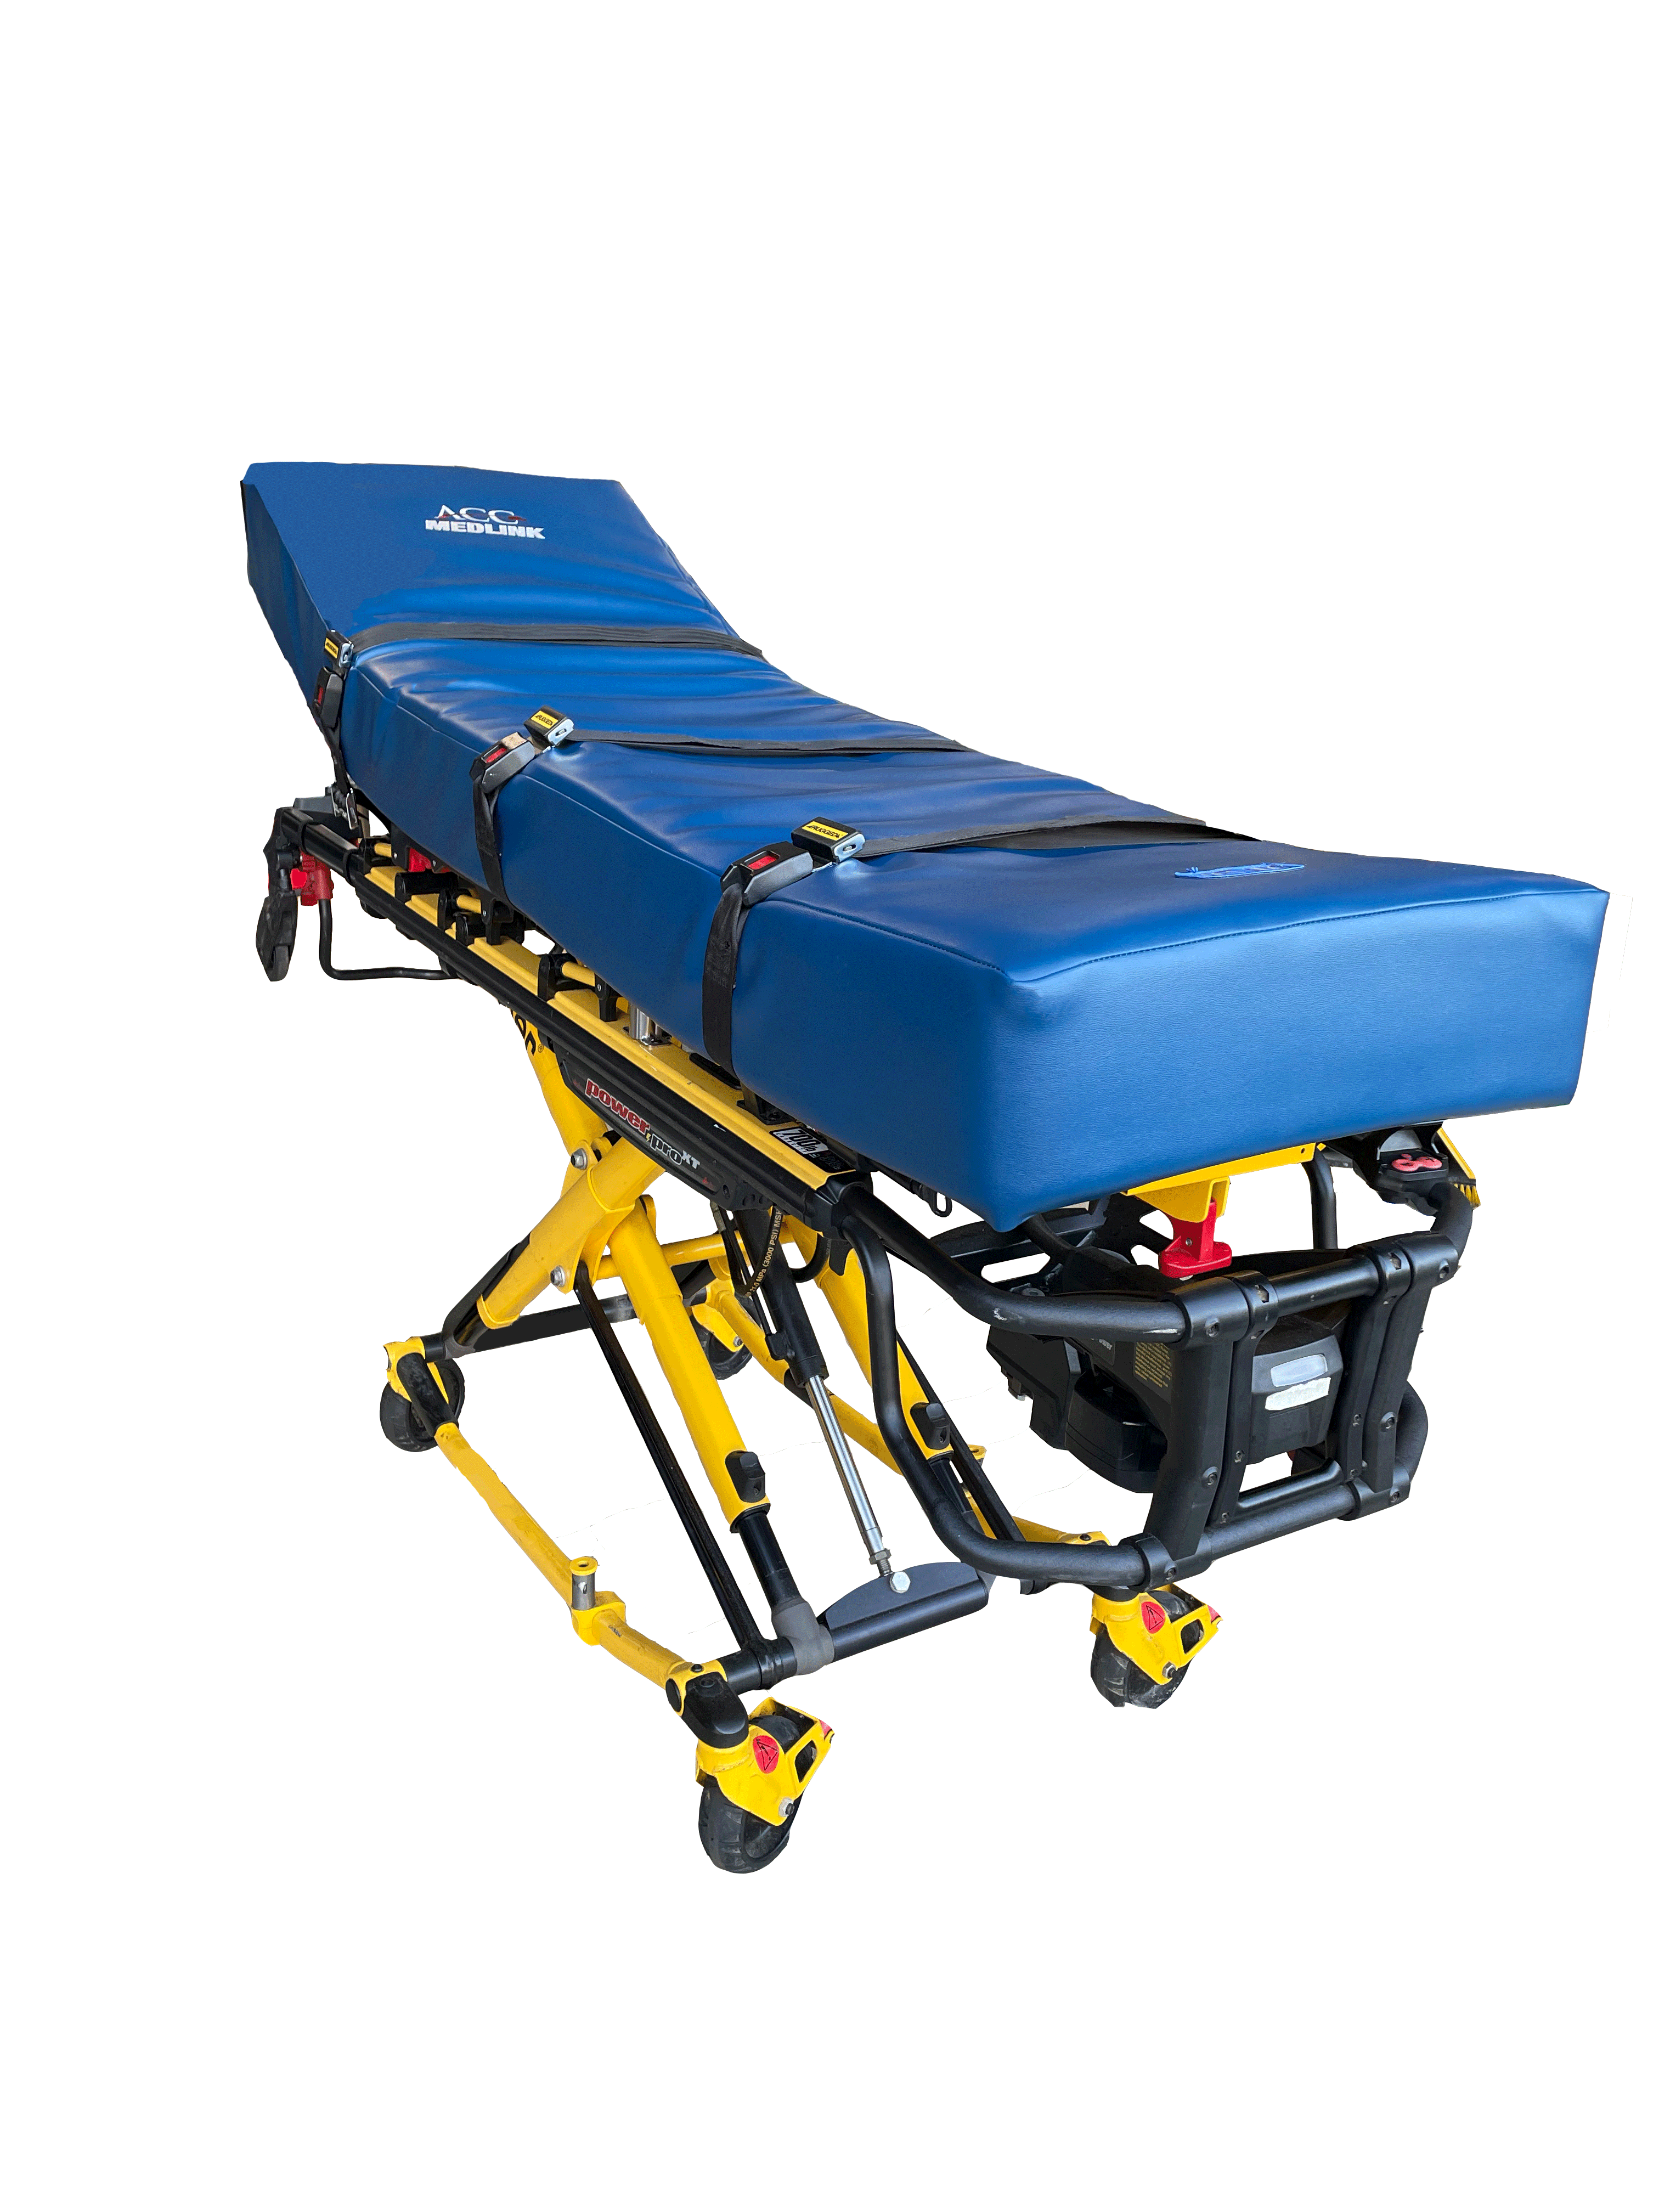 ACC Medlink's state-of-the-art stretcher for stretcher transport service.